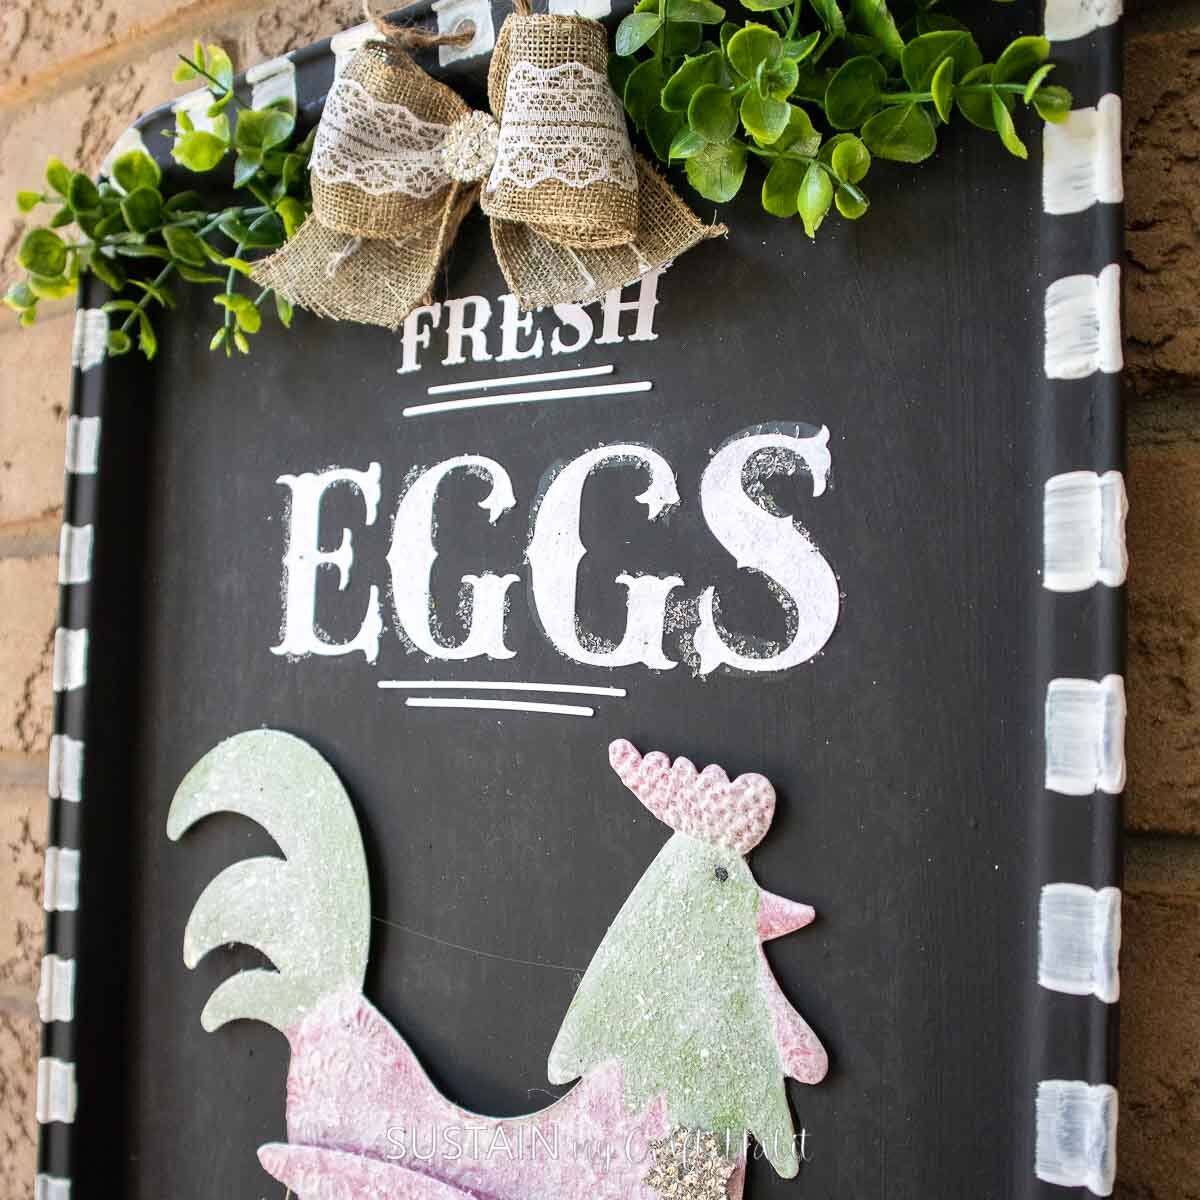 fresh eggs sign